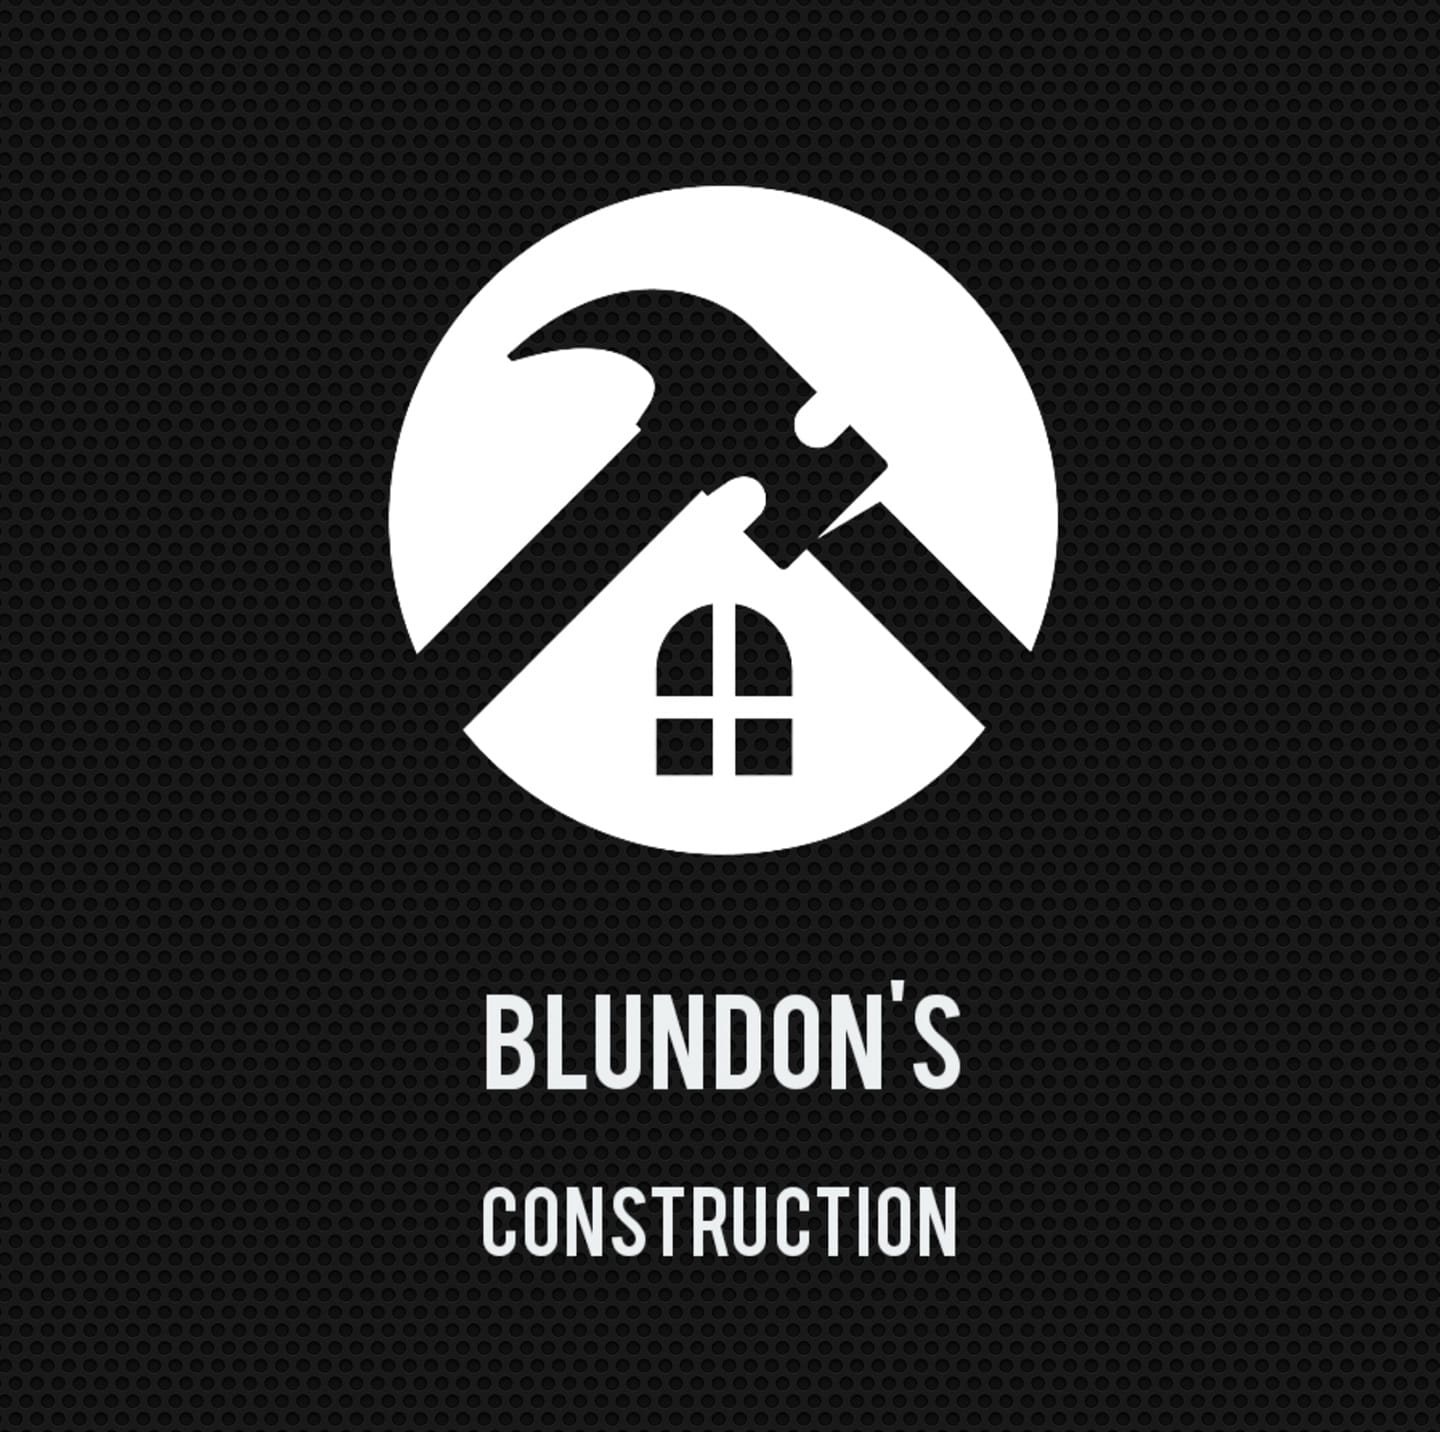 Blundon's Construction